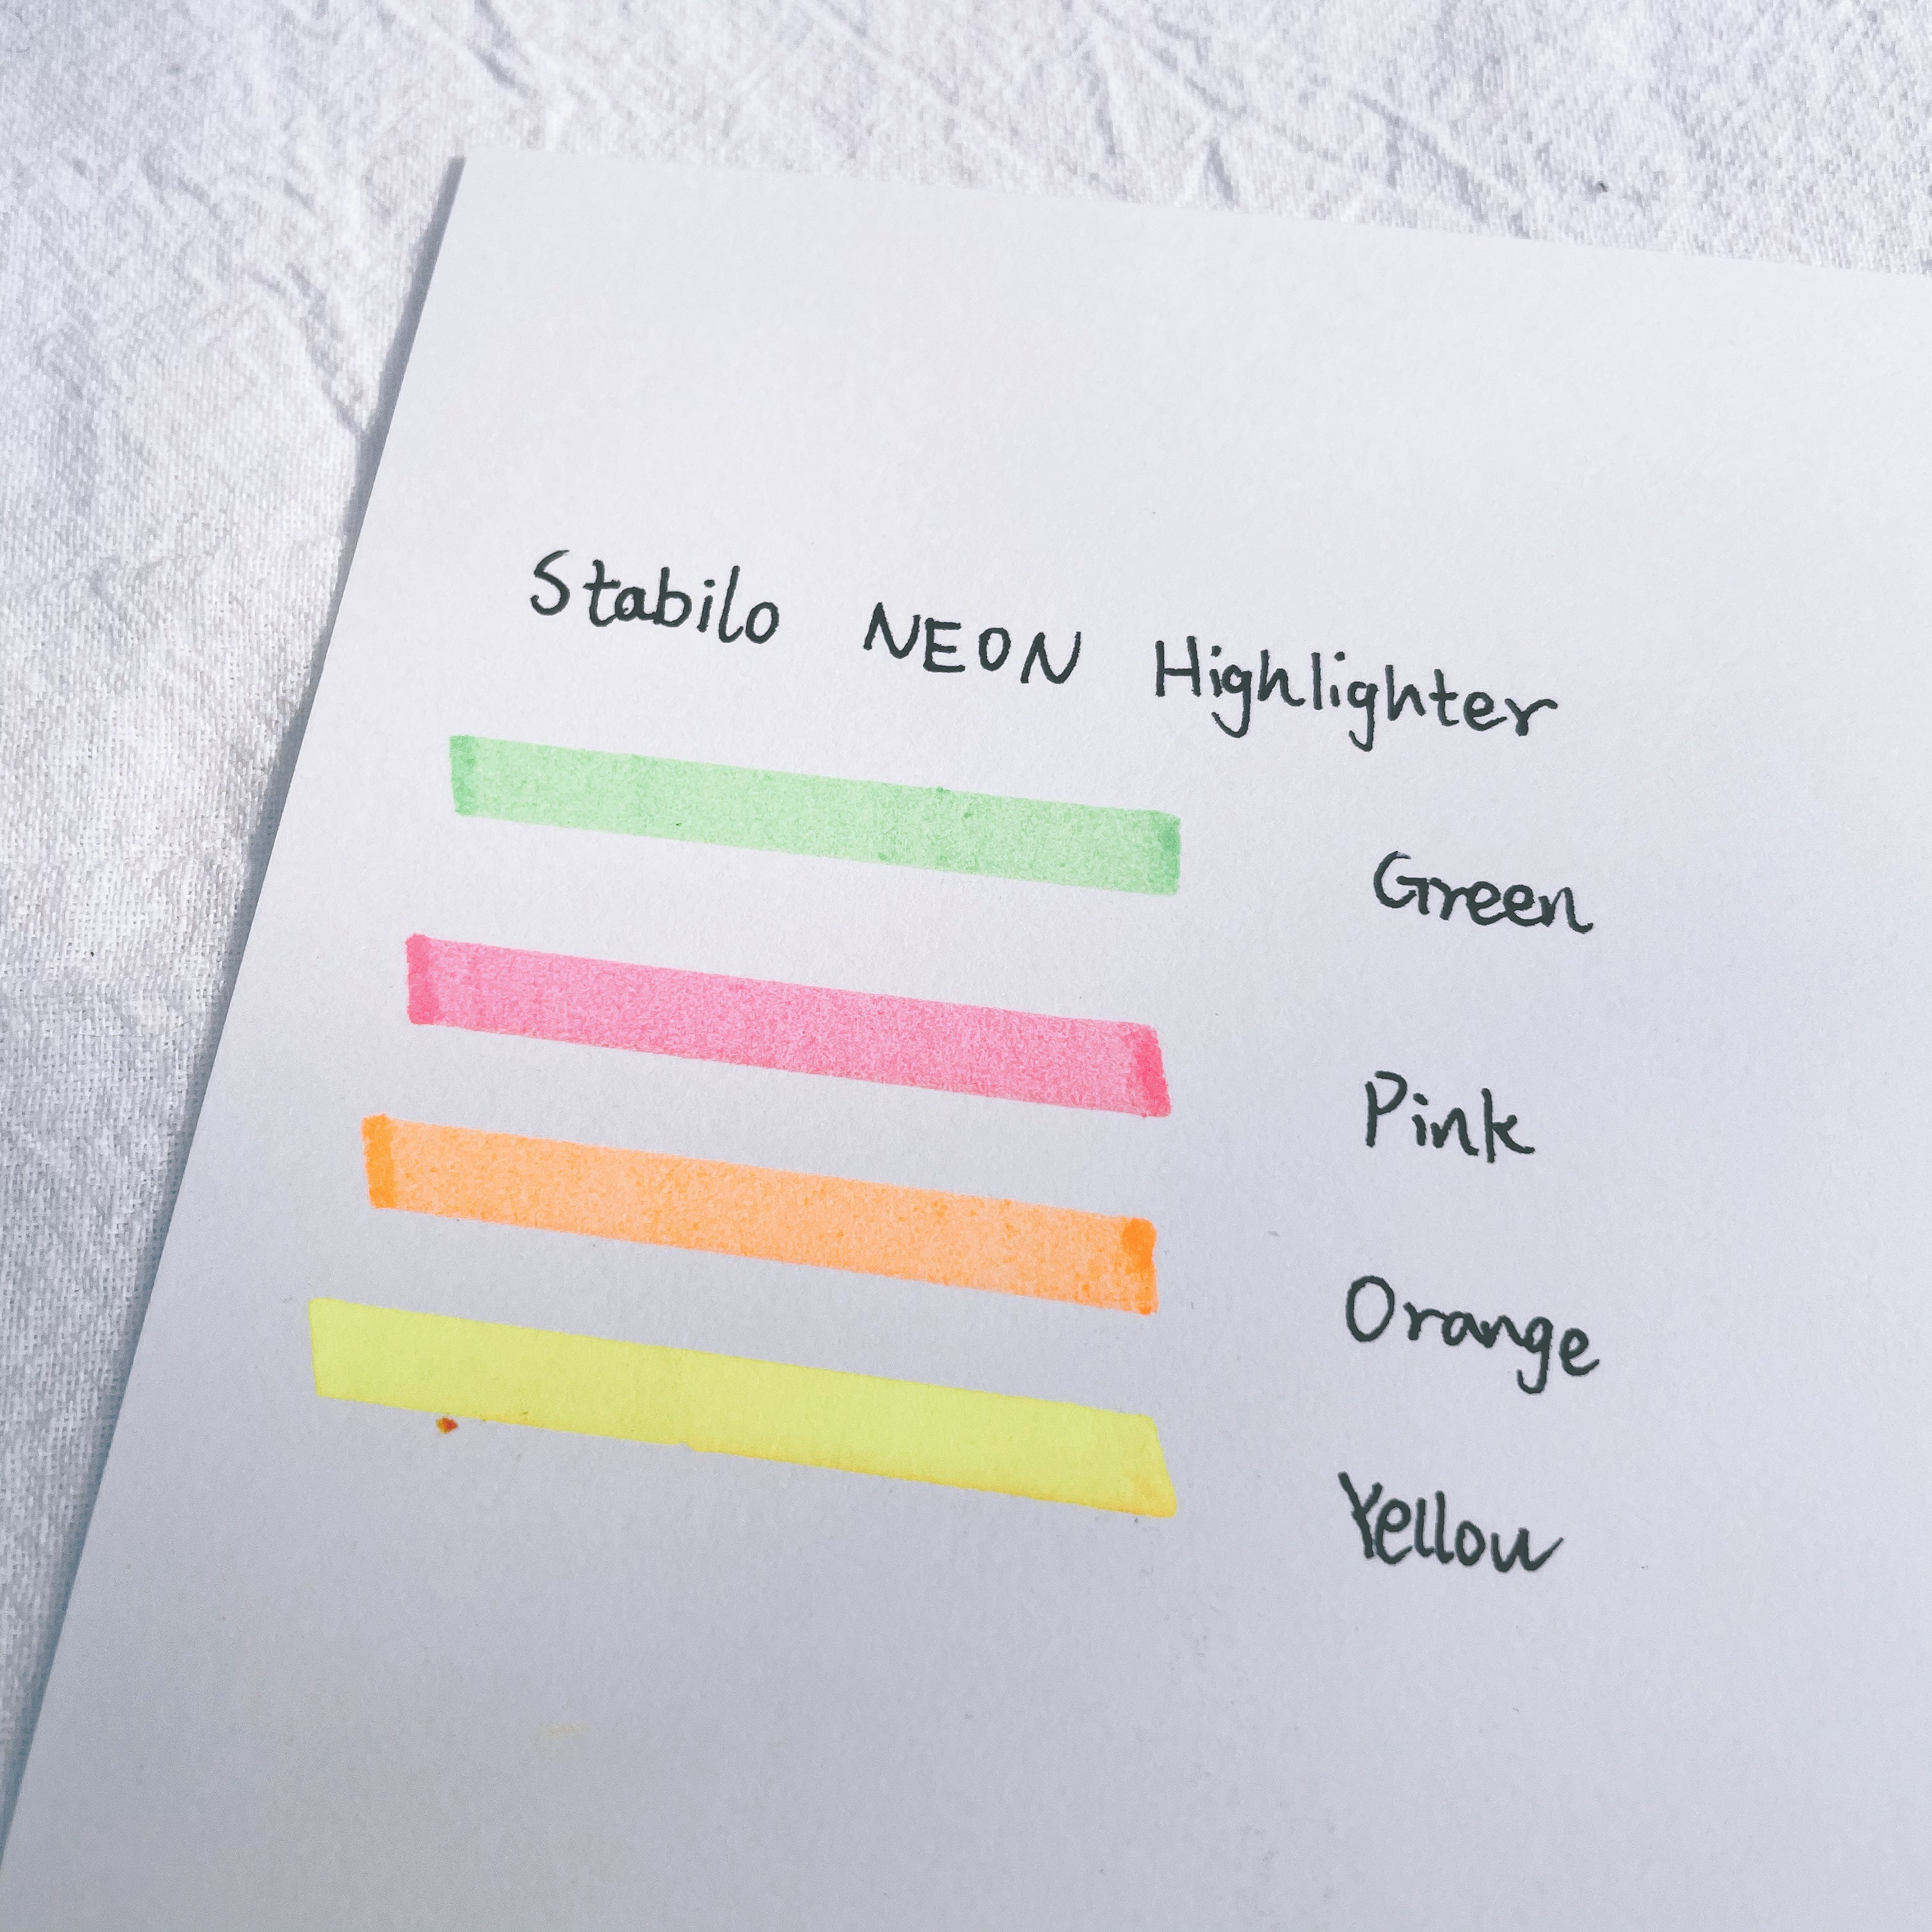 Stabilo Neon Highlighter - Yellow